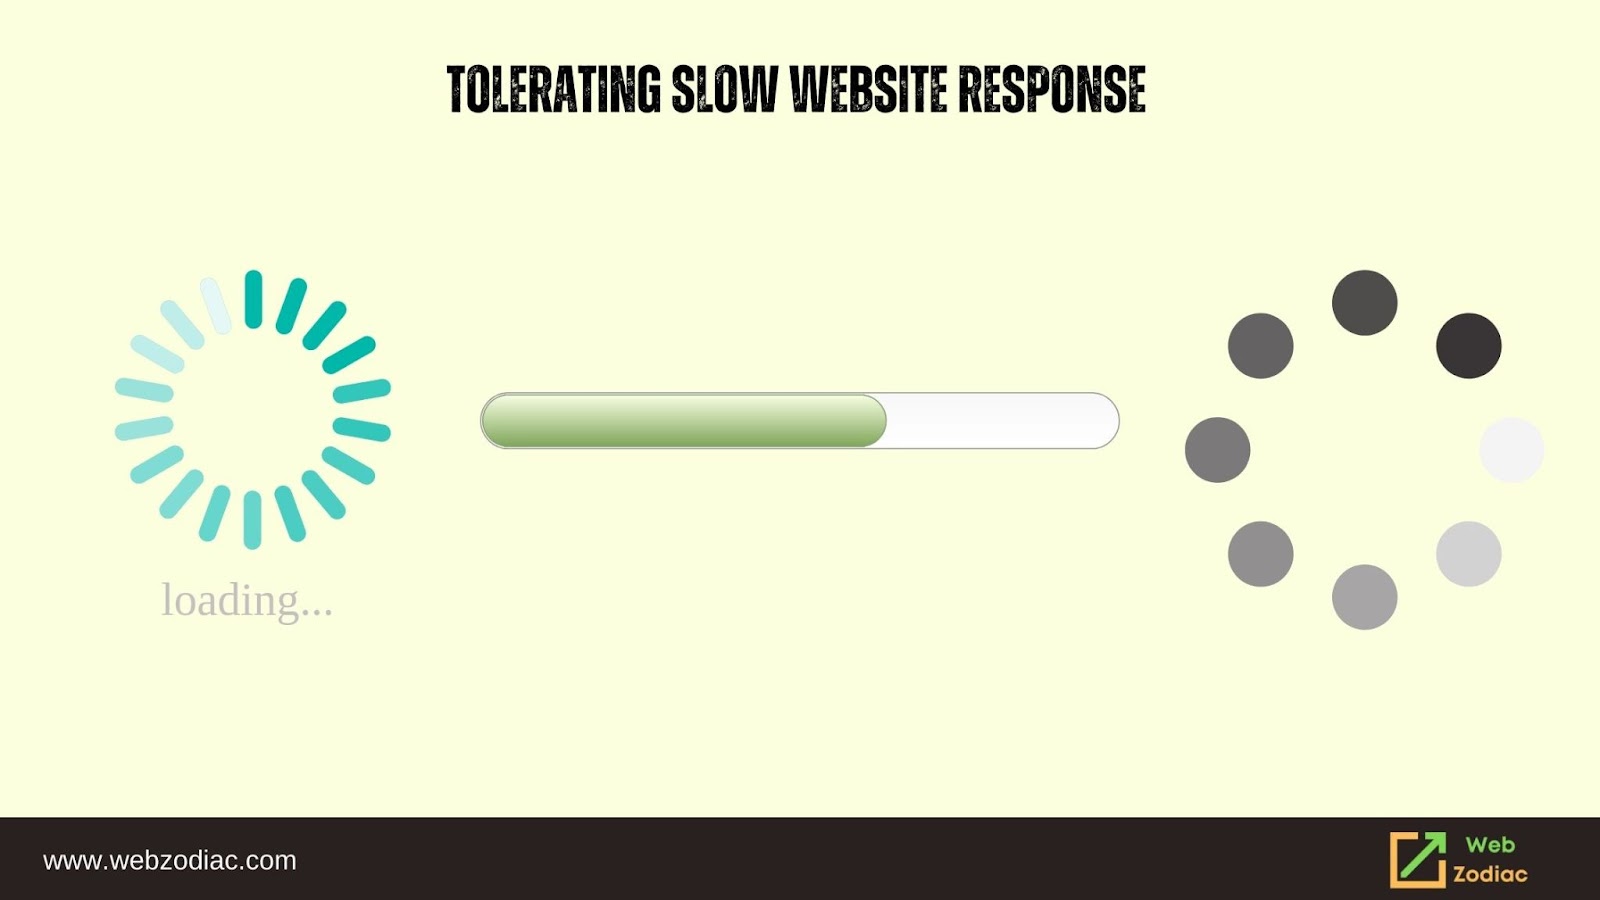 Slow website response image